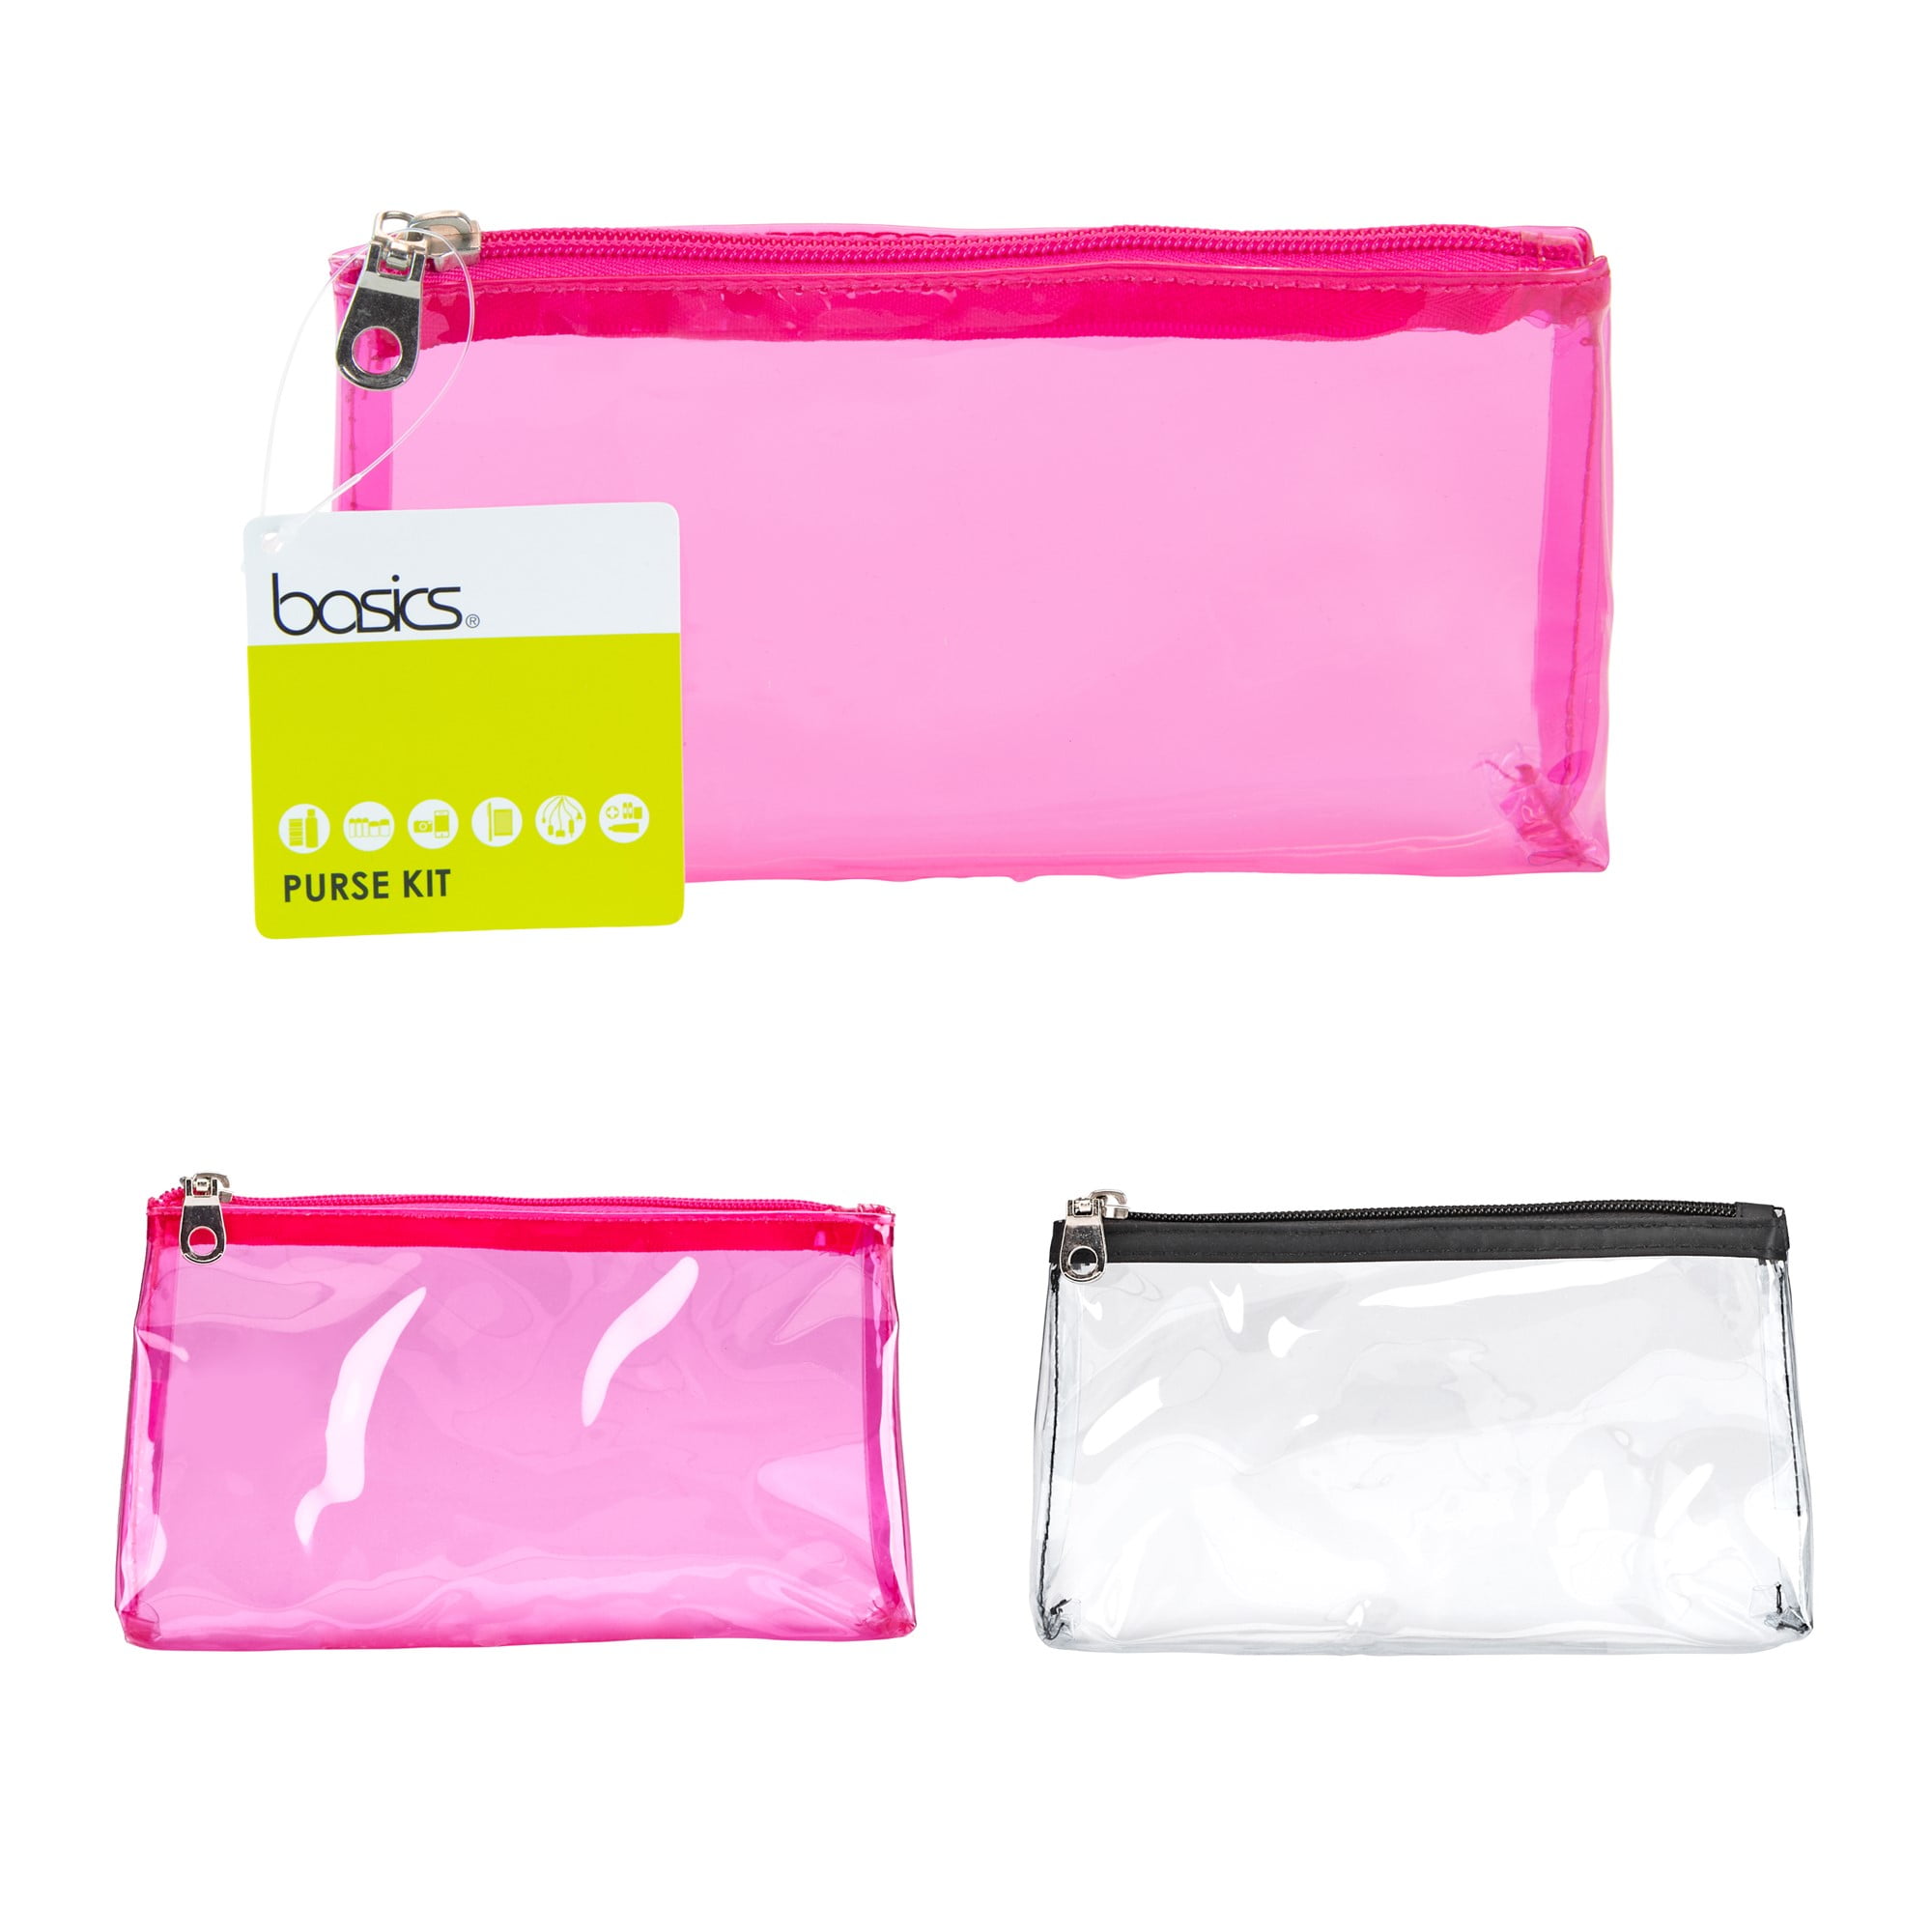 PARFUMS Zipper Cosmetic Double Bag / Makeup Pouch / Clutch 